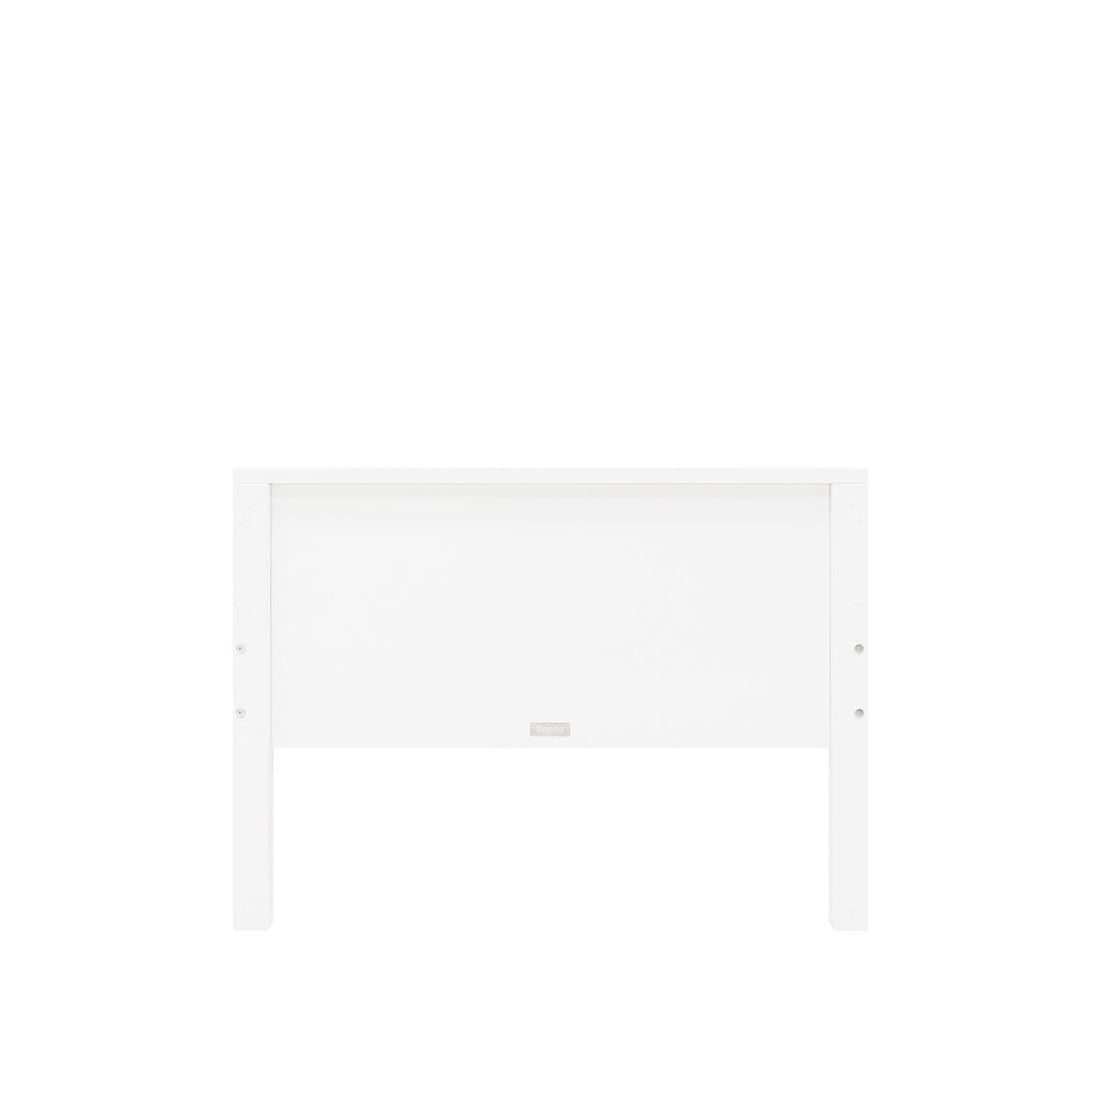 bopita-basic-bed-combiflex-90x200cm-white-bopt-43014611- (4)